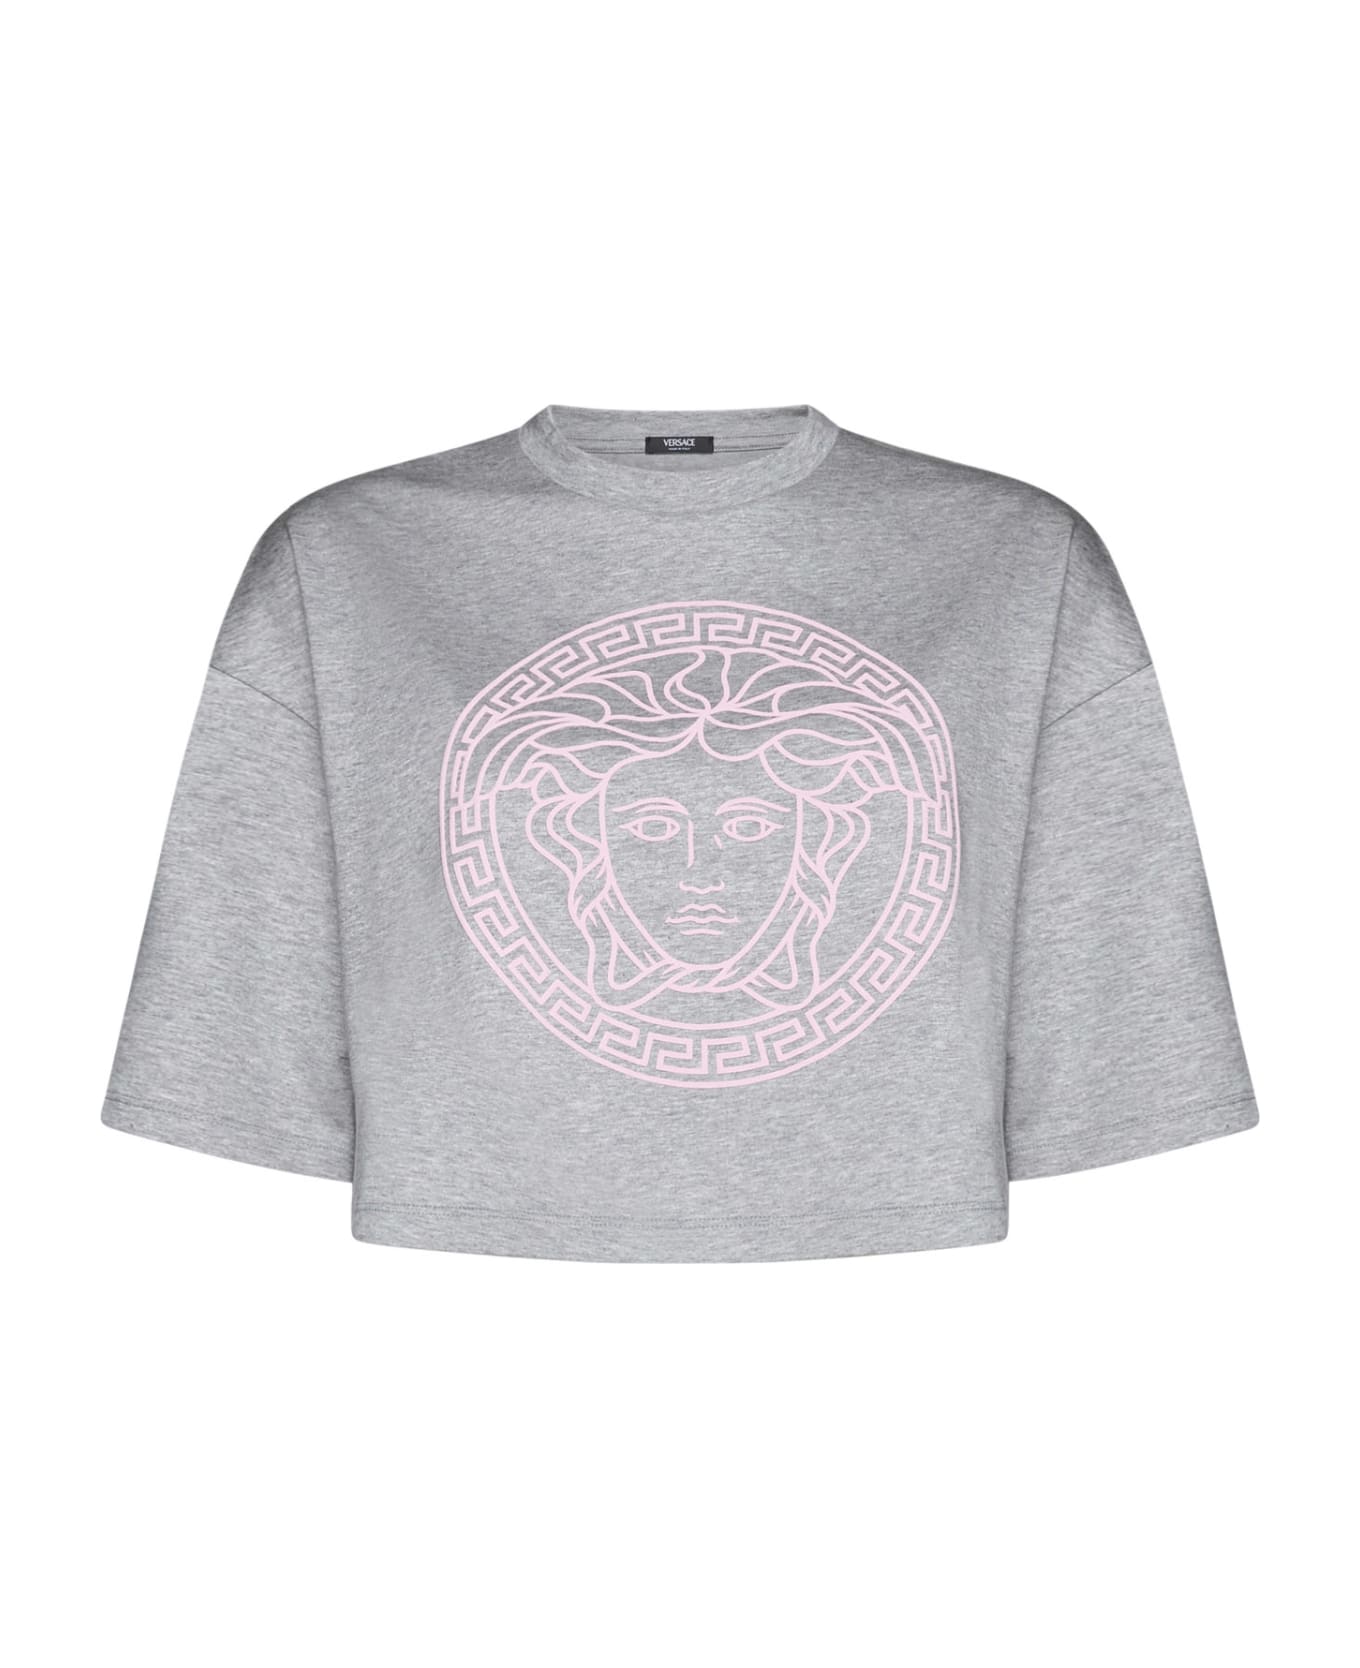 Versace T-shirt With Logo - Gray melange+pale pink